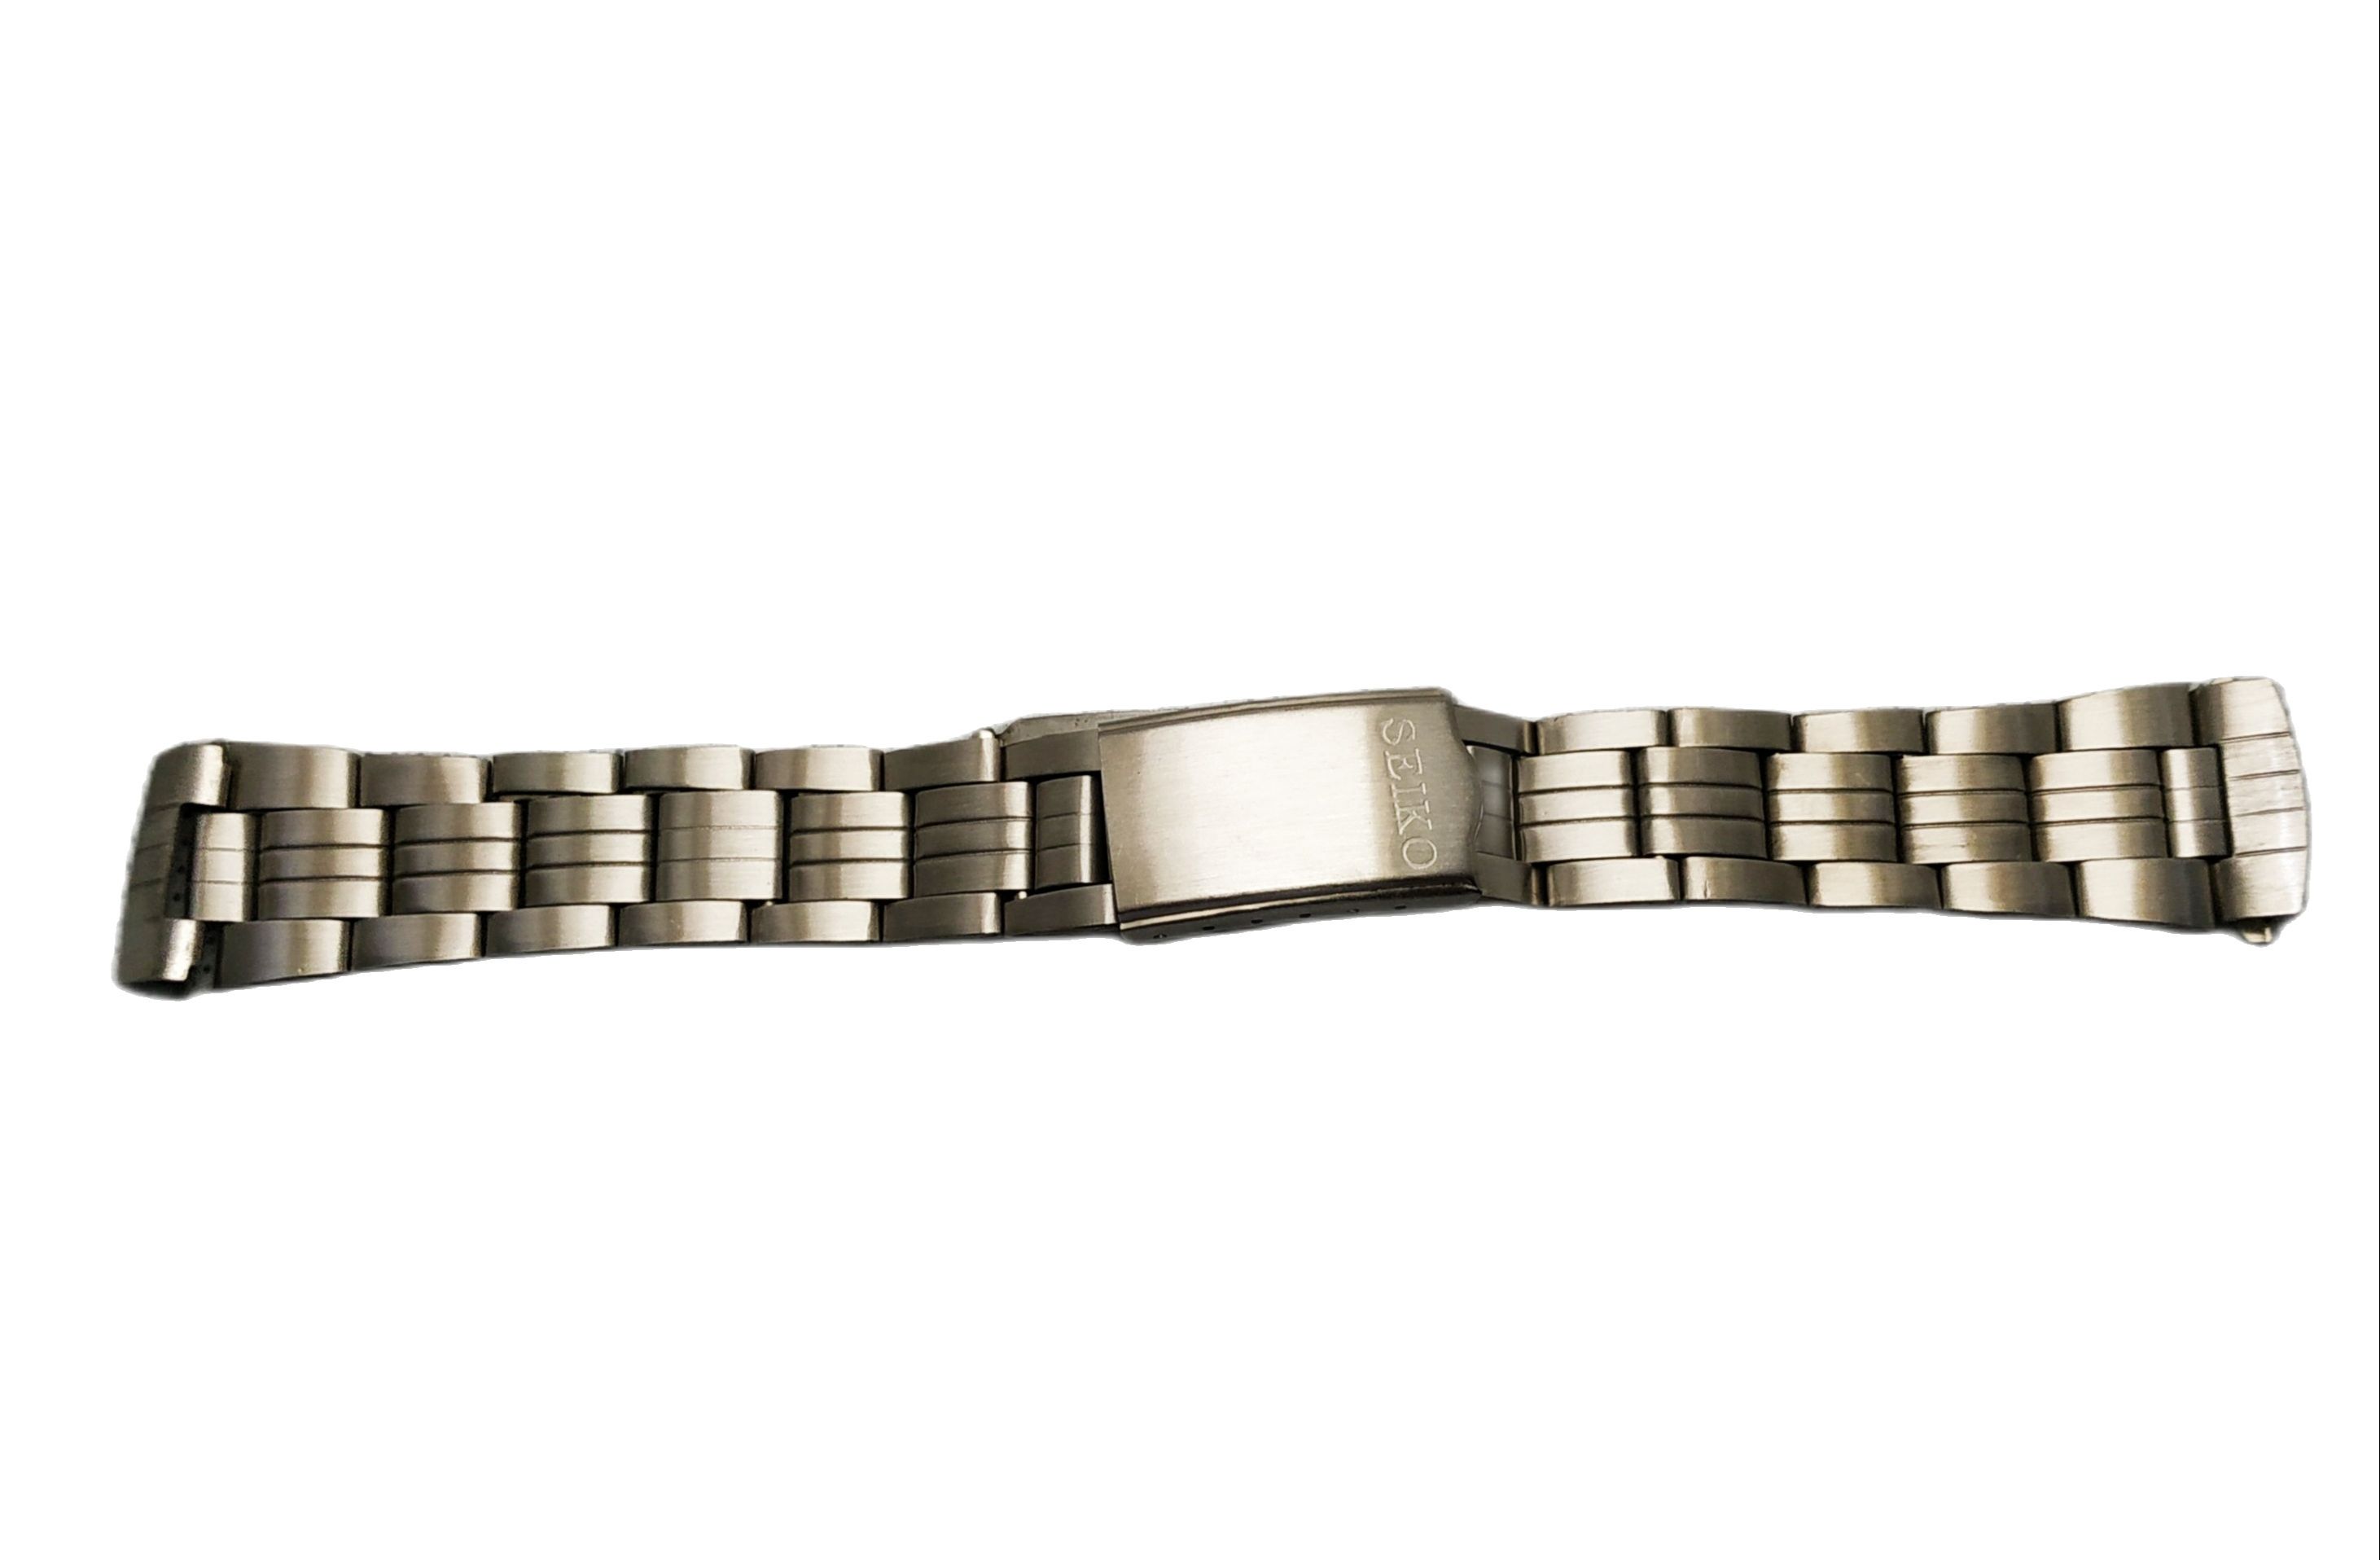 Seiko Pogue Replacement Bracelet for 6139-6002,6005,6032